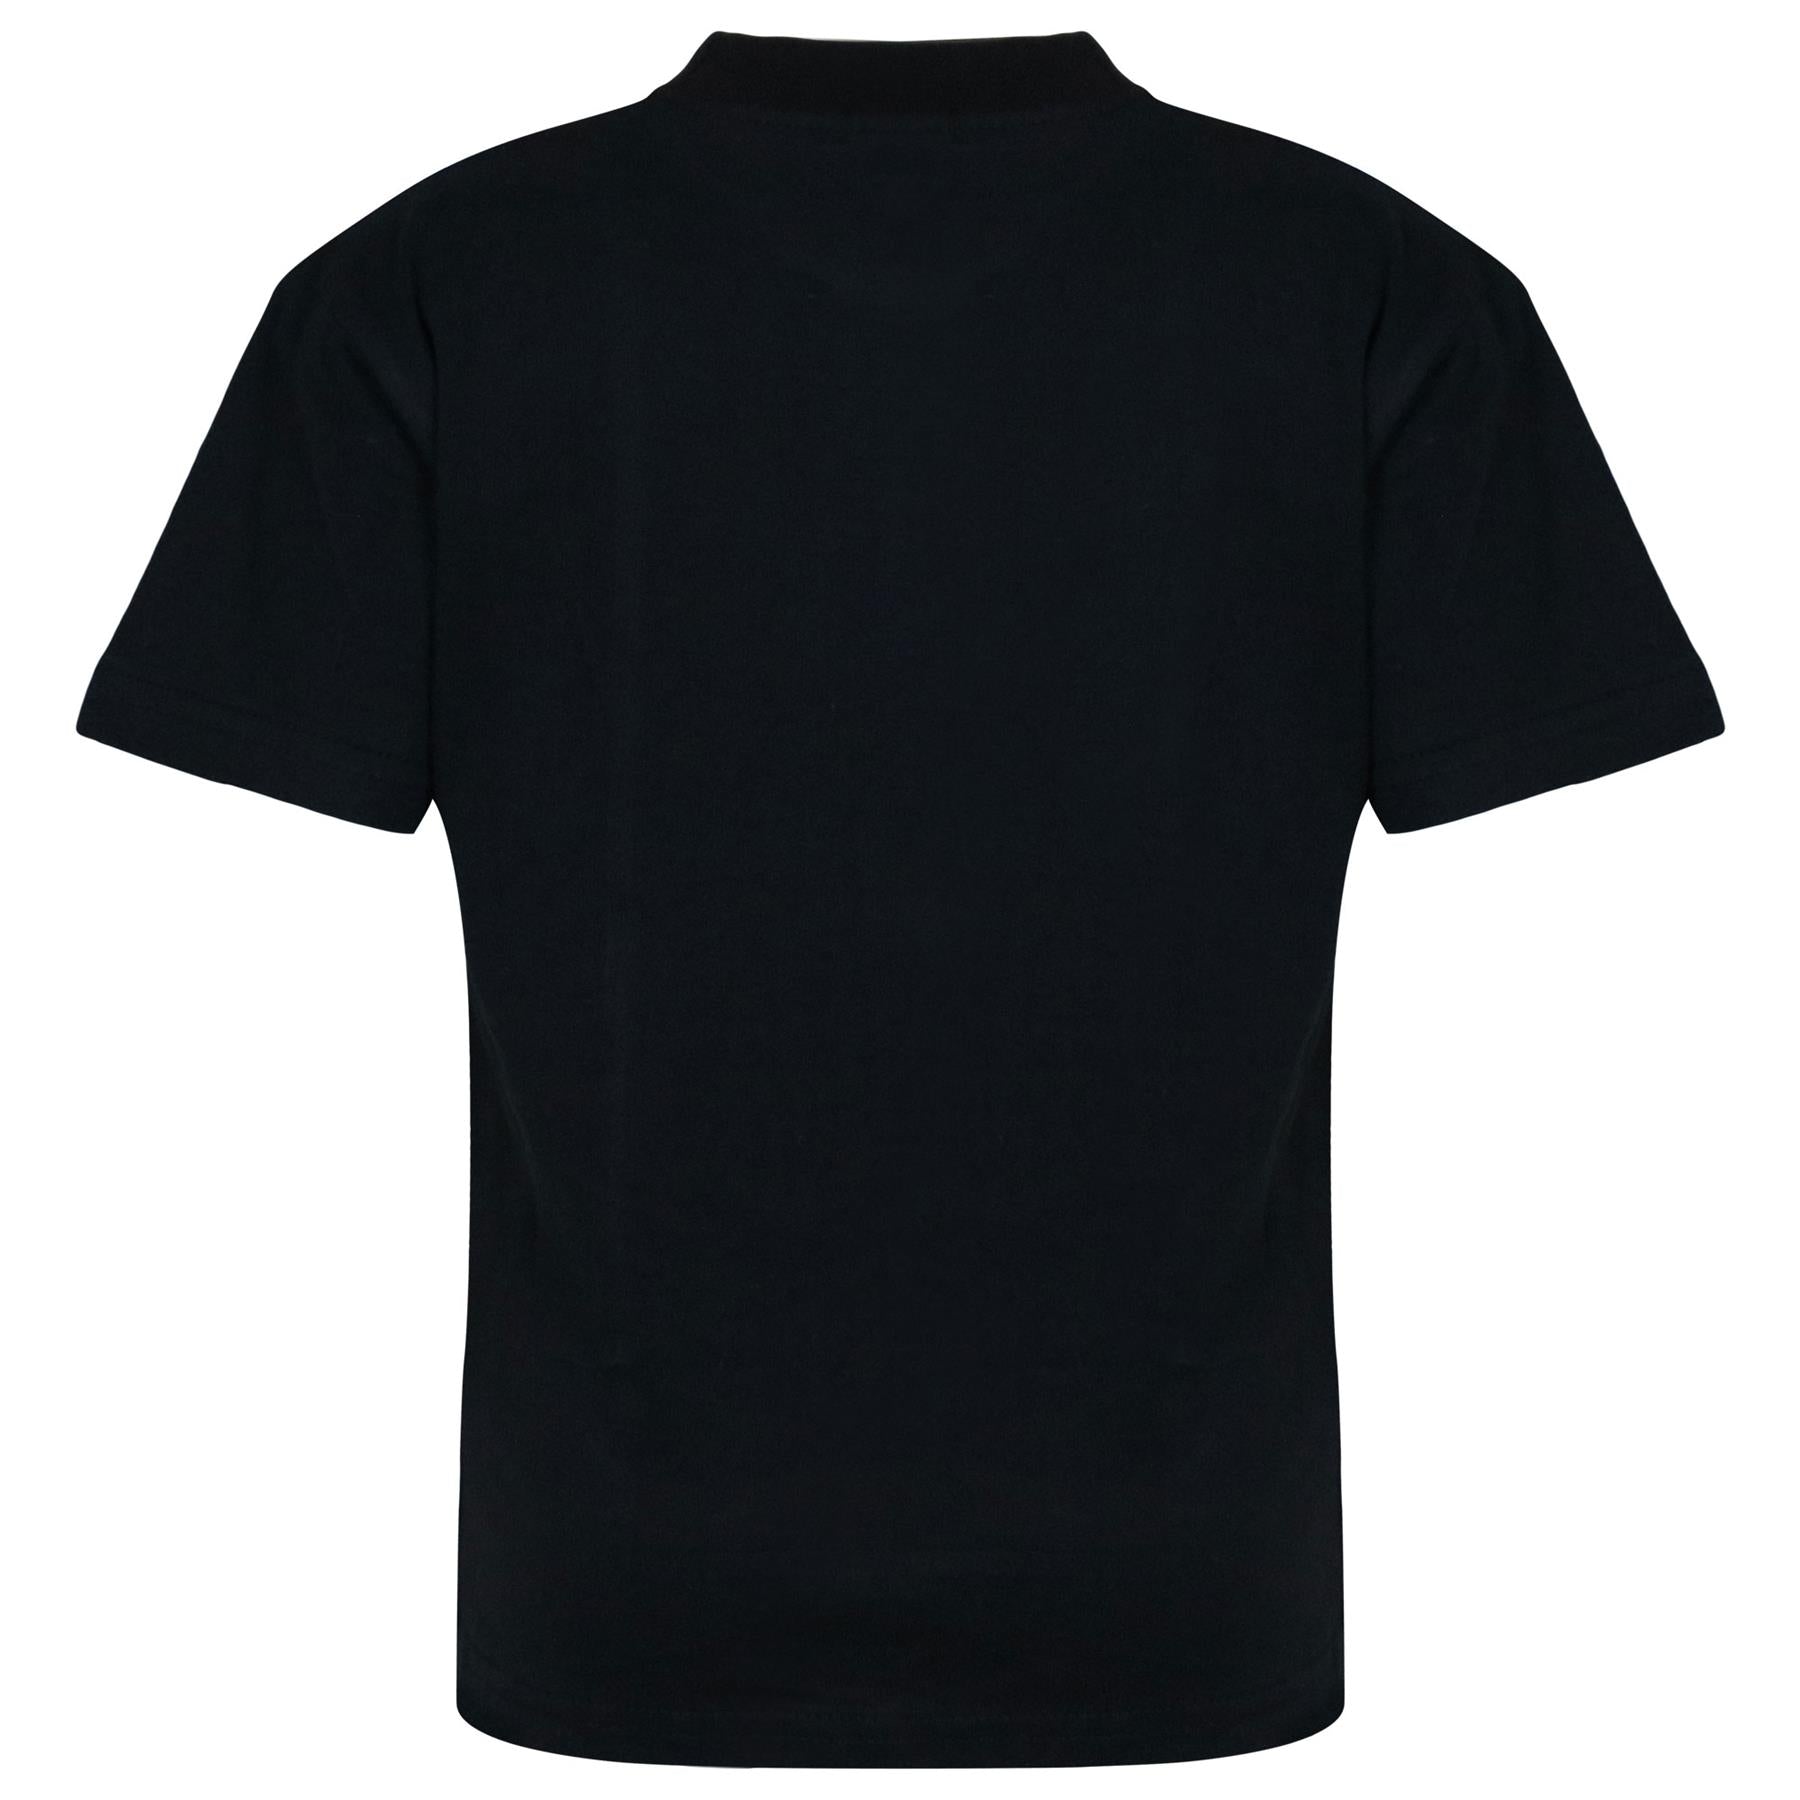 Kids Boys T Shirt Shorts 100% Cotton Contrast Panel Top Summer Short Set 5-13 Yr